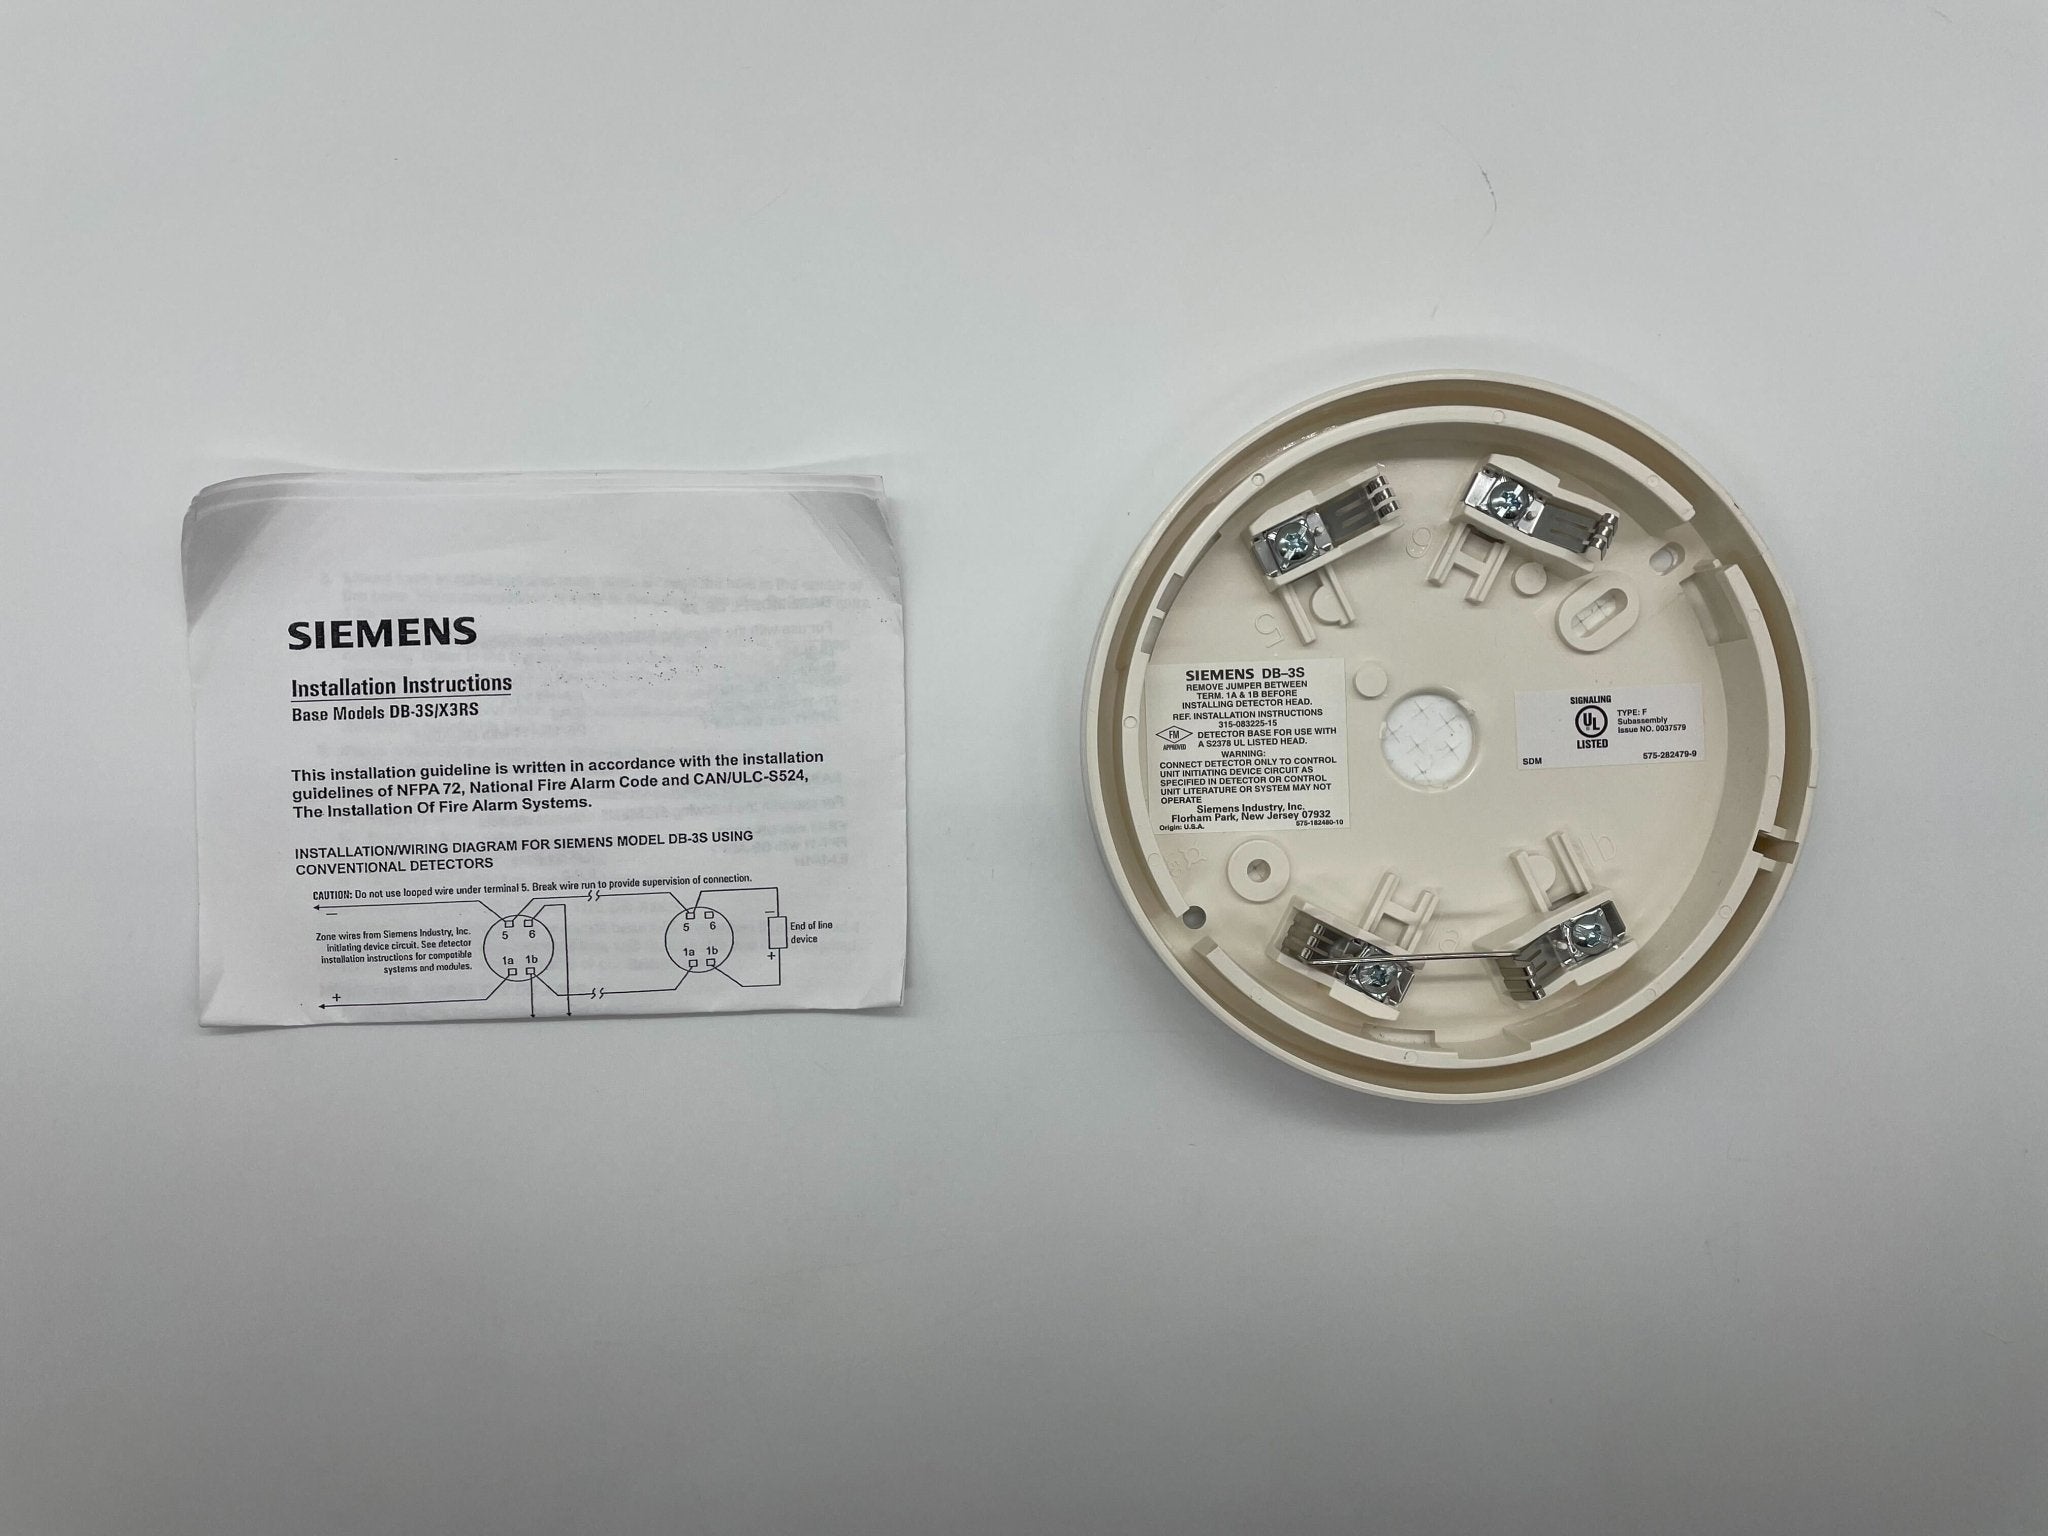 Siemens DB-3S - The Fire Alarm Supplier